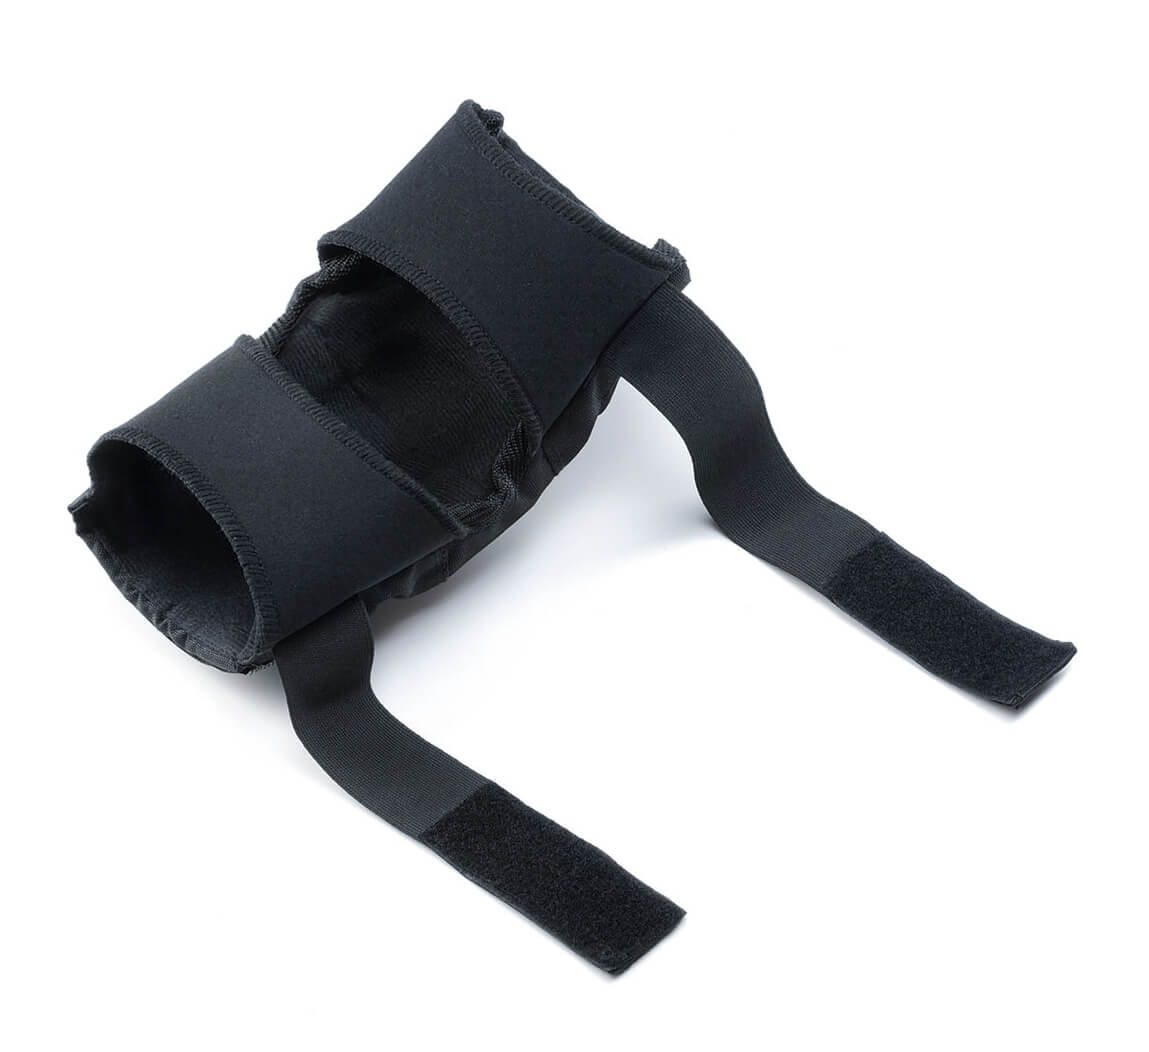 CORE Protection Pro Elbow Pad – Black/Grey